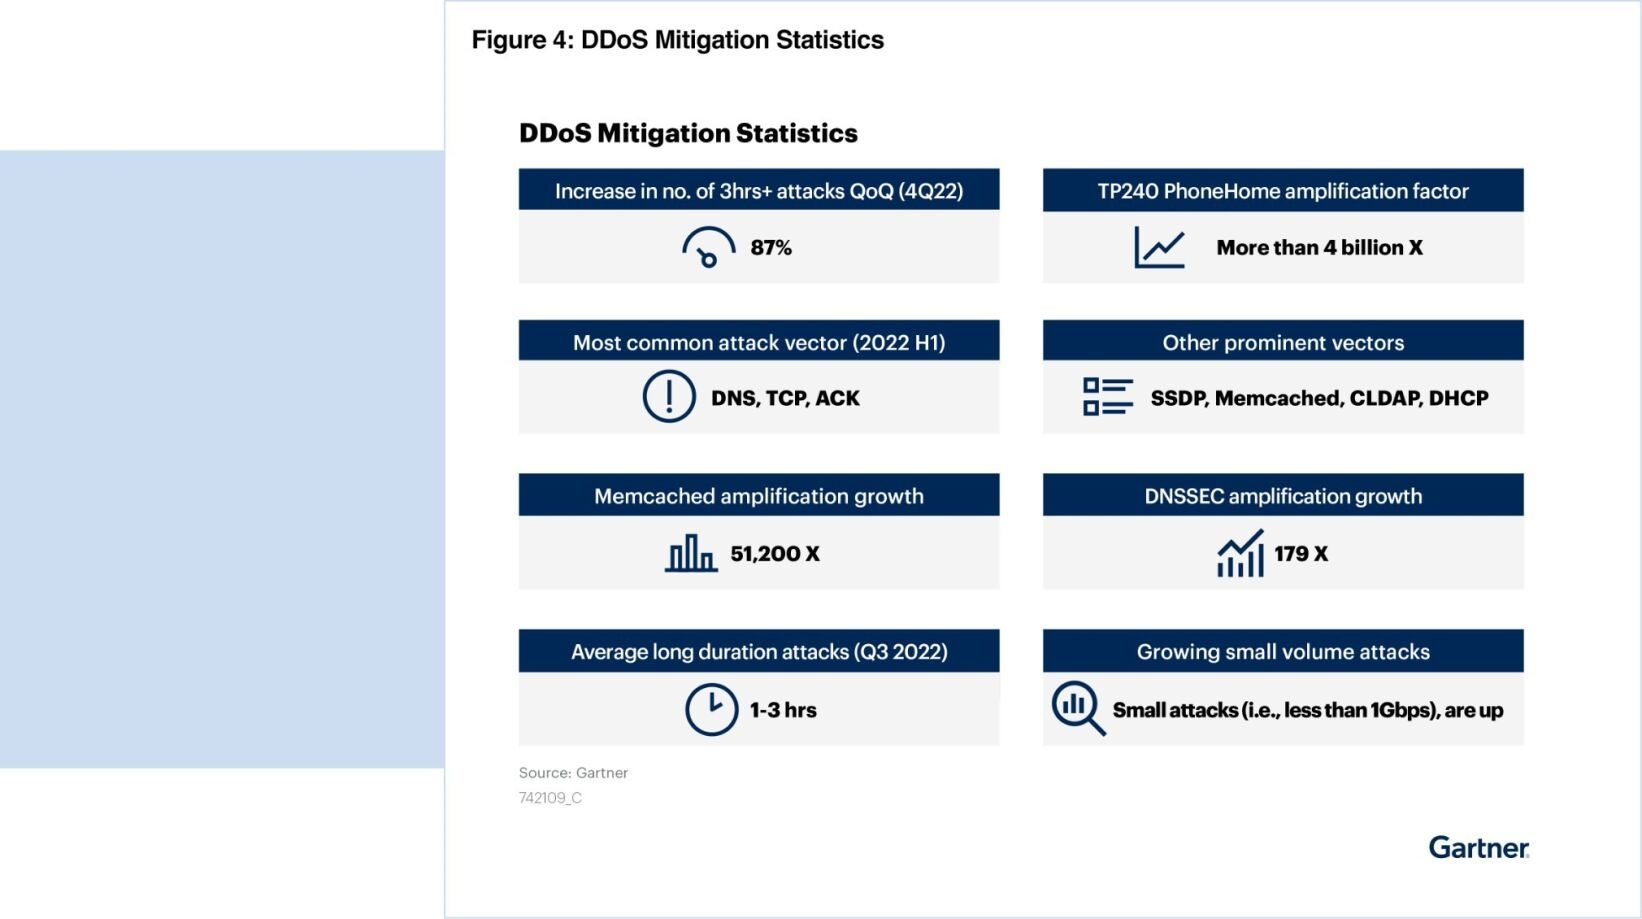 Figure 4: DDos Mitigation Statistics